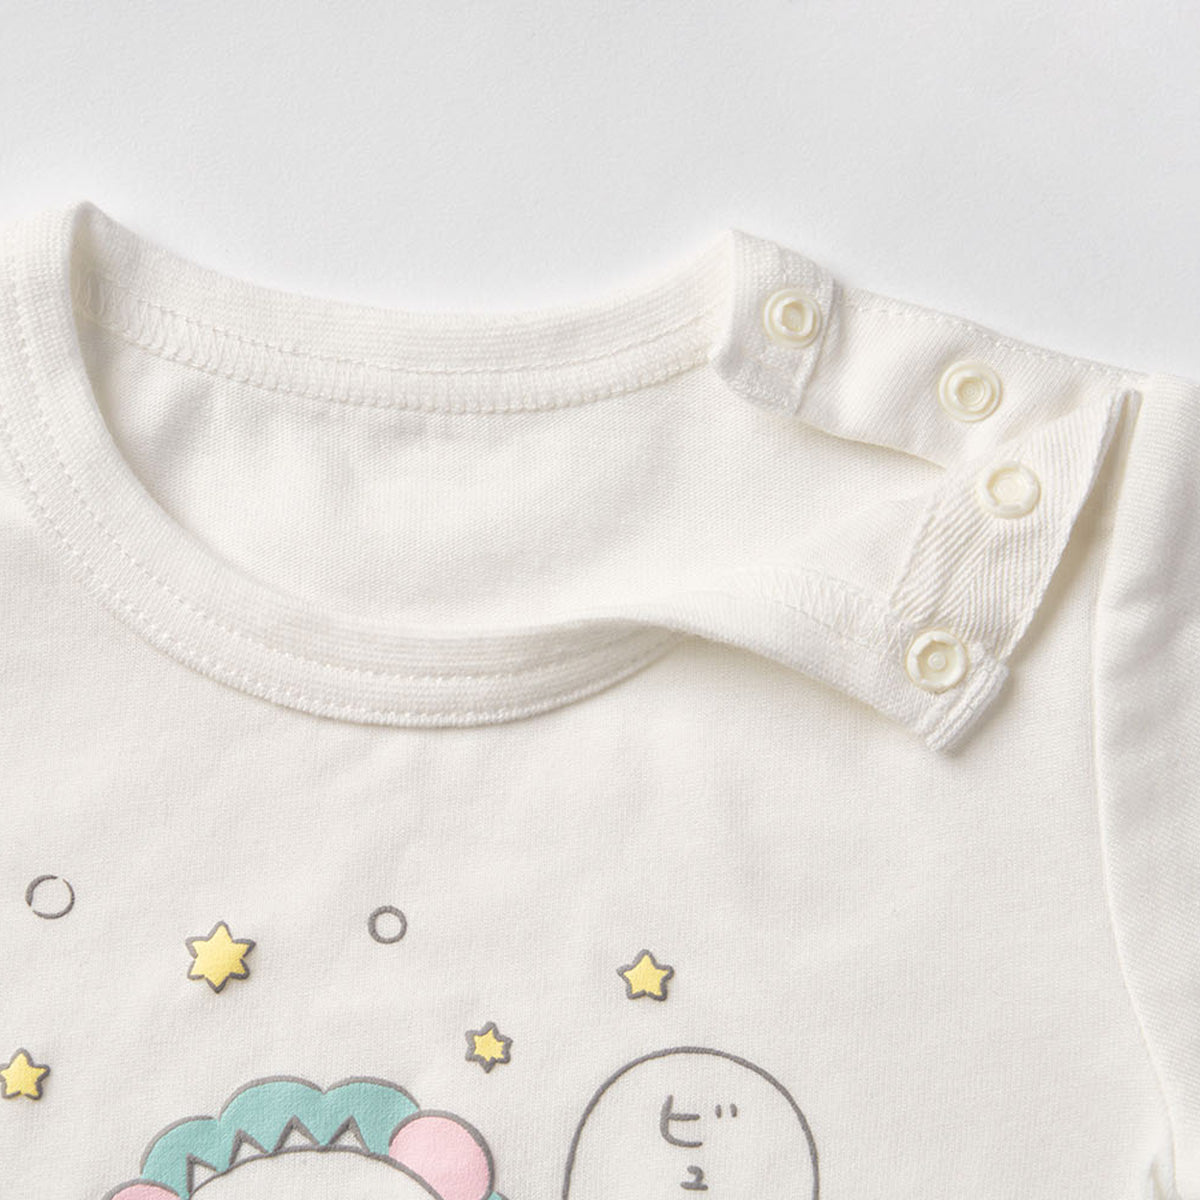 COJI-COJI BABY ぷっくり 子供用Tシャツ